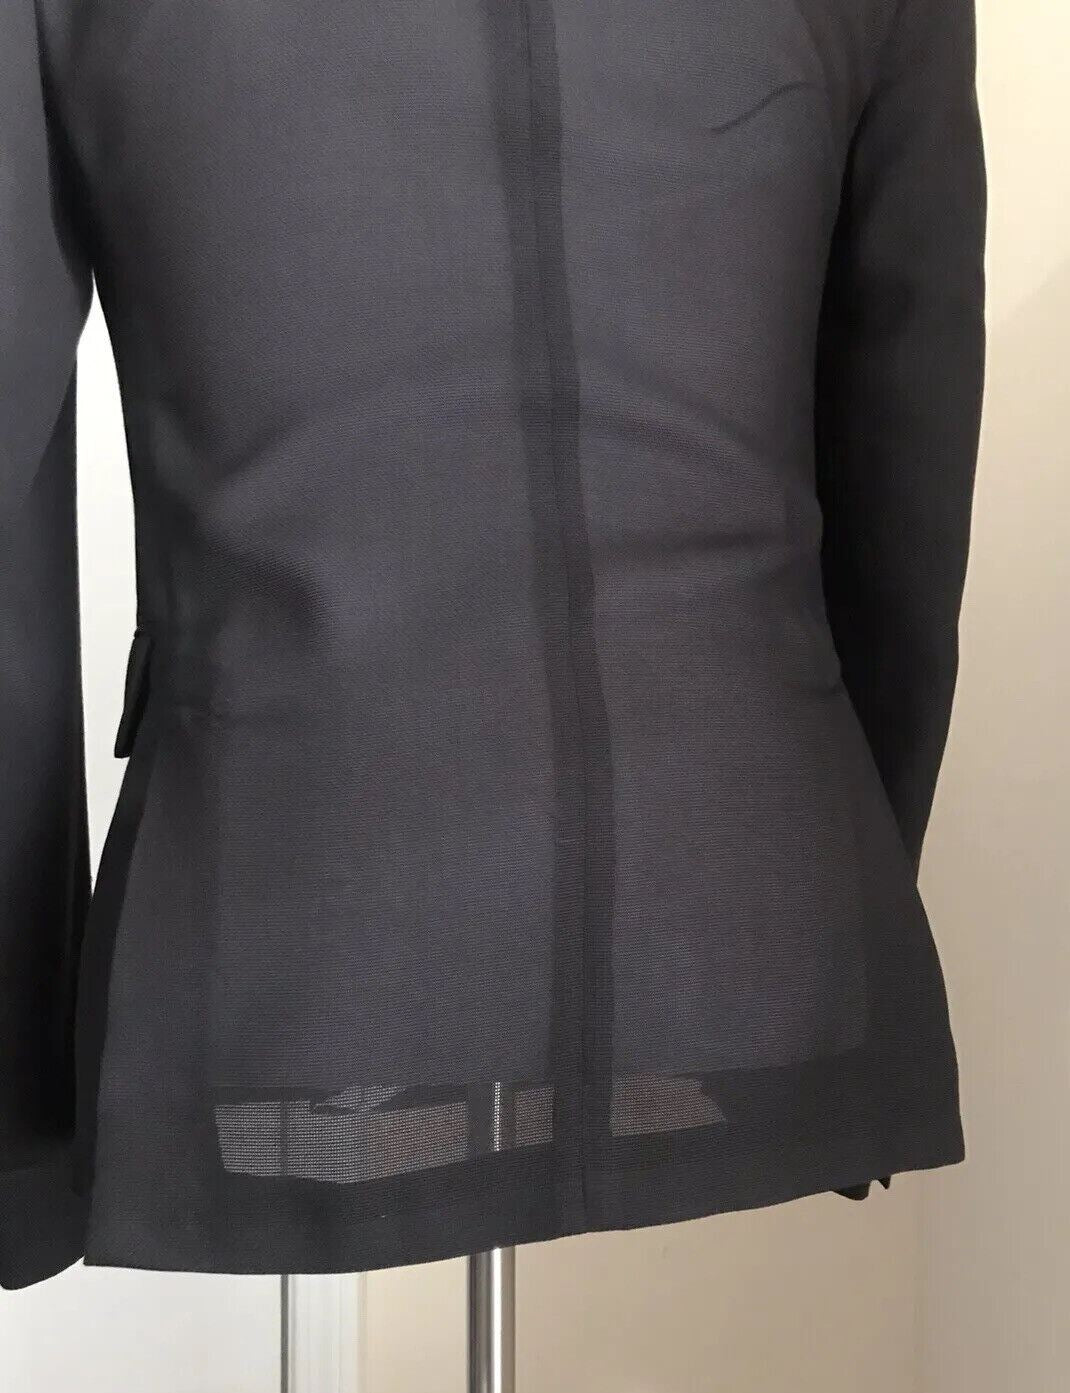 NWT $2295 Valentino Men Silk Sport Coat Blazer Jacket Black 34R US/44R Eu Italy